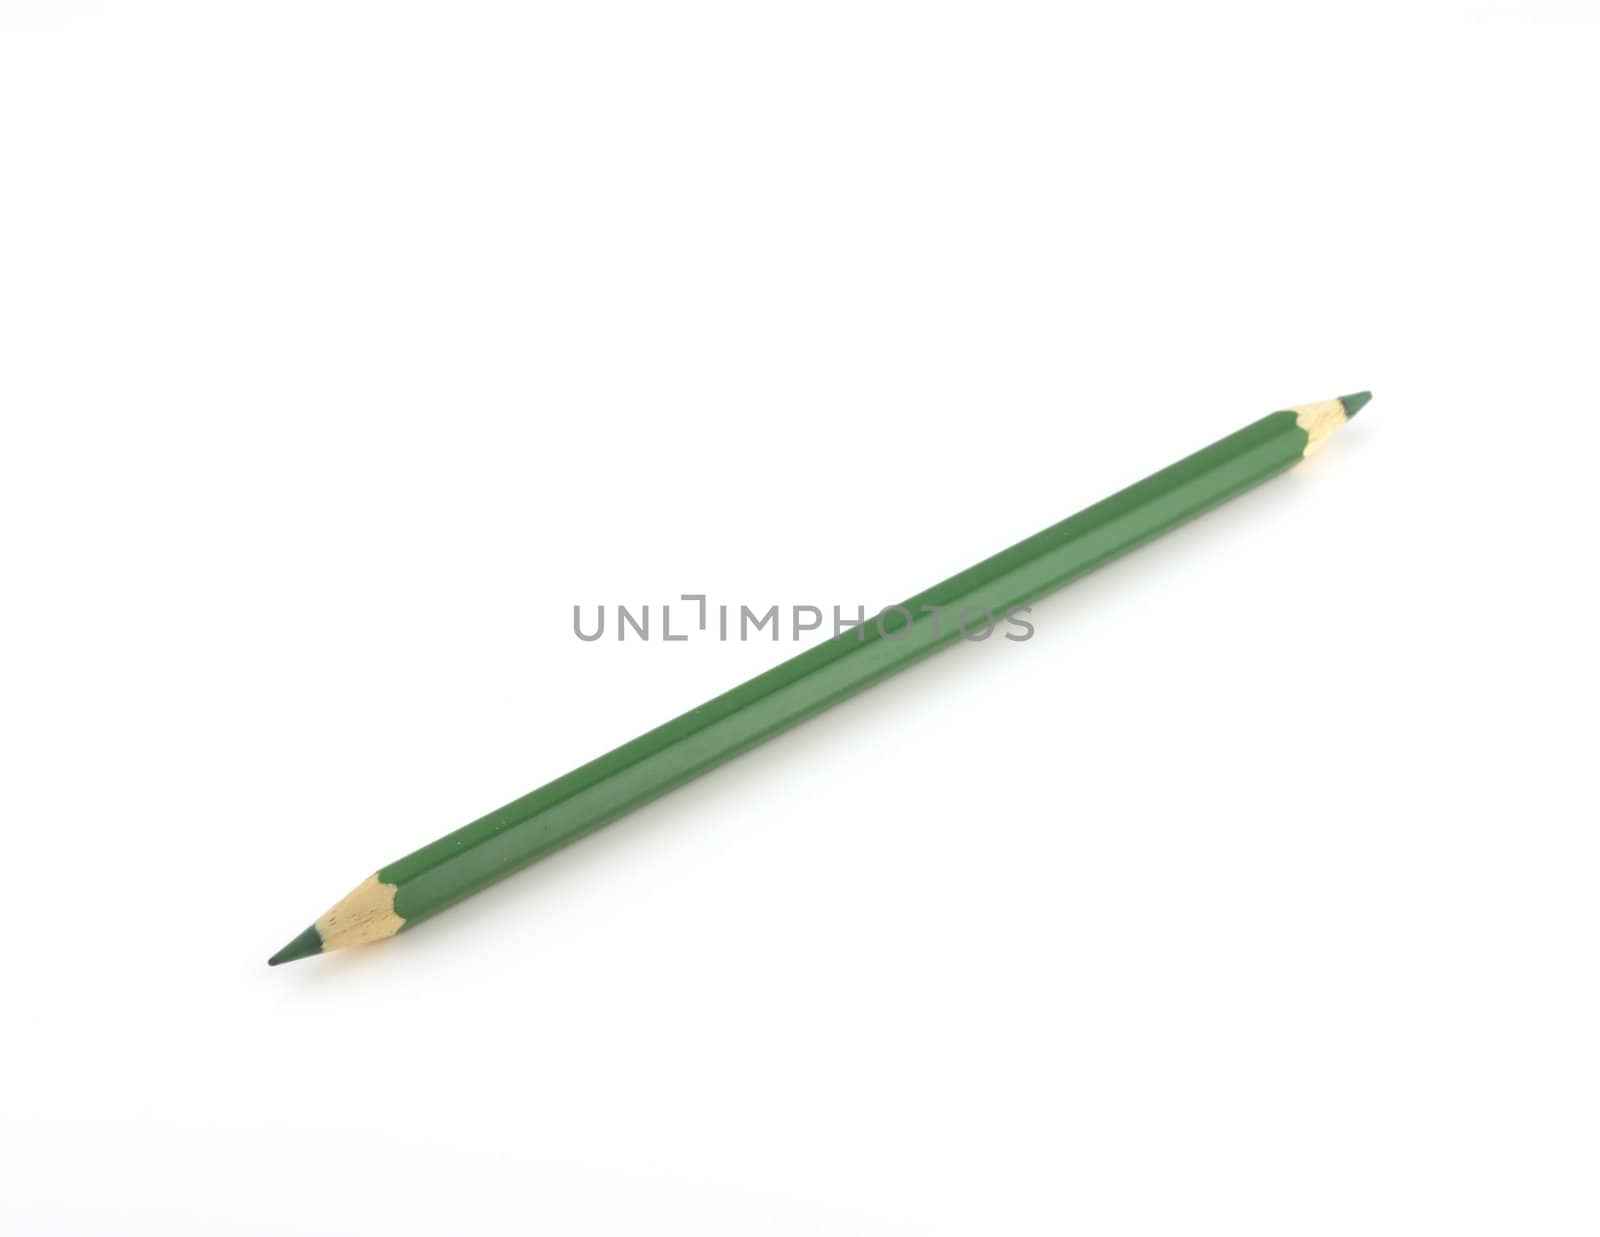 Green pencil over white